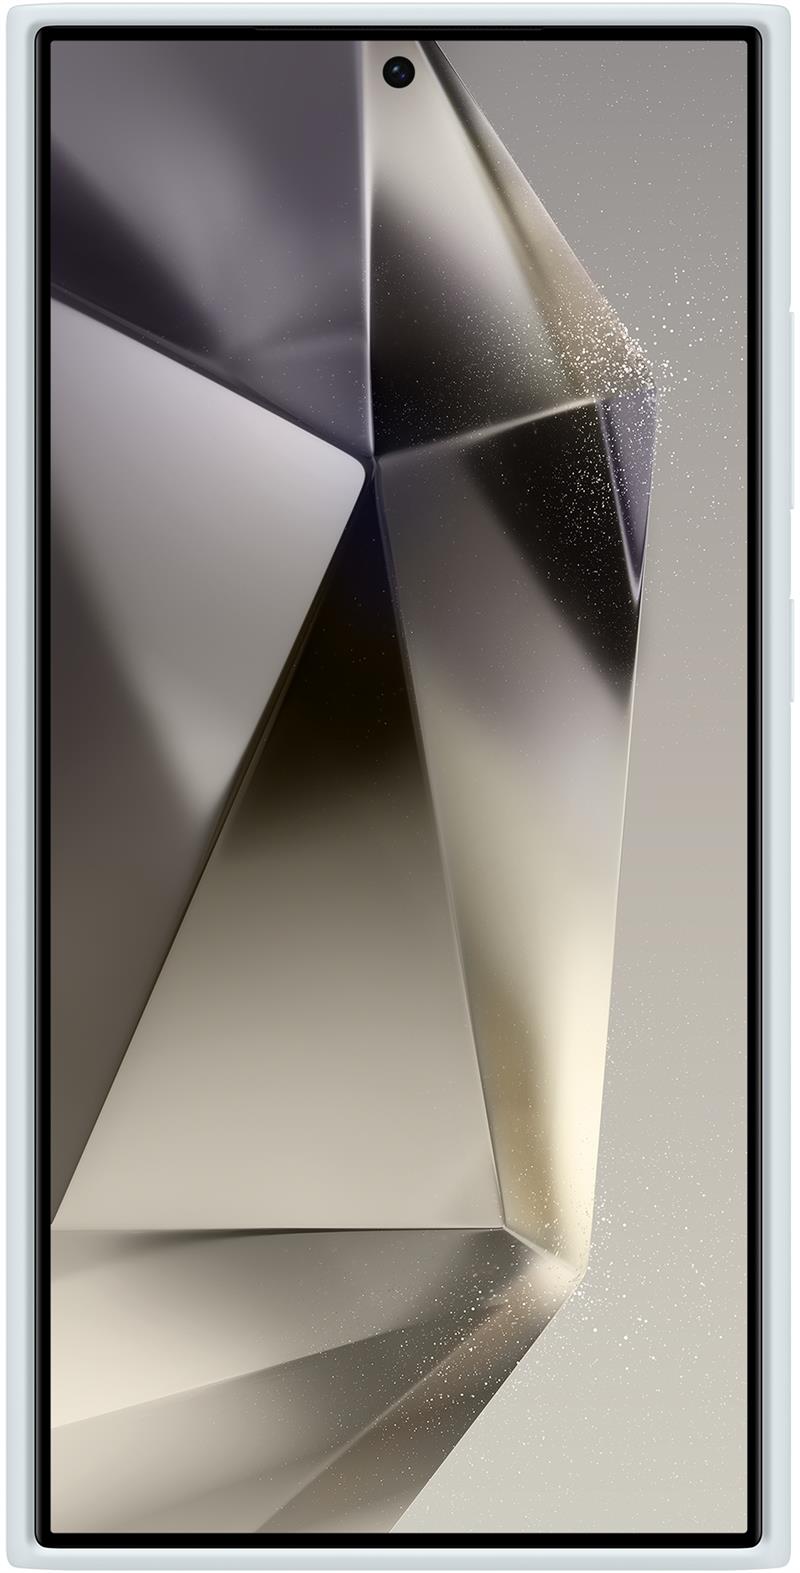 Samsung Silicone Case White mobiele telefoon behuizingen 17,3 cm (6.8"") Hoes Wit